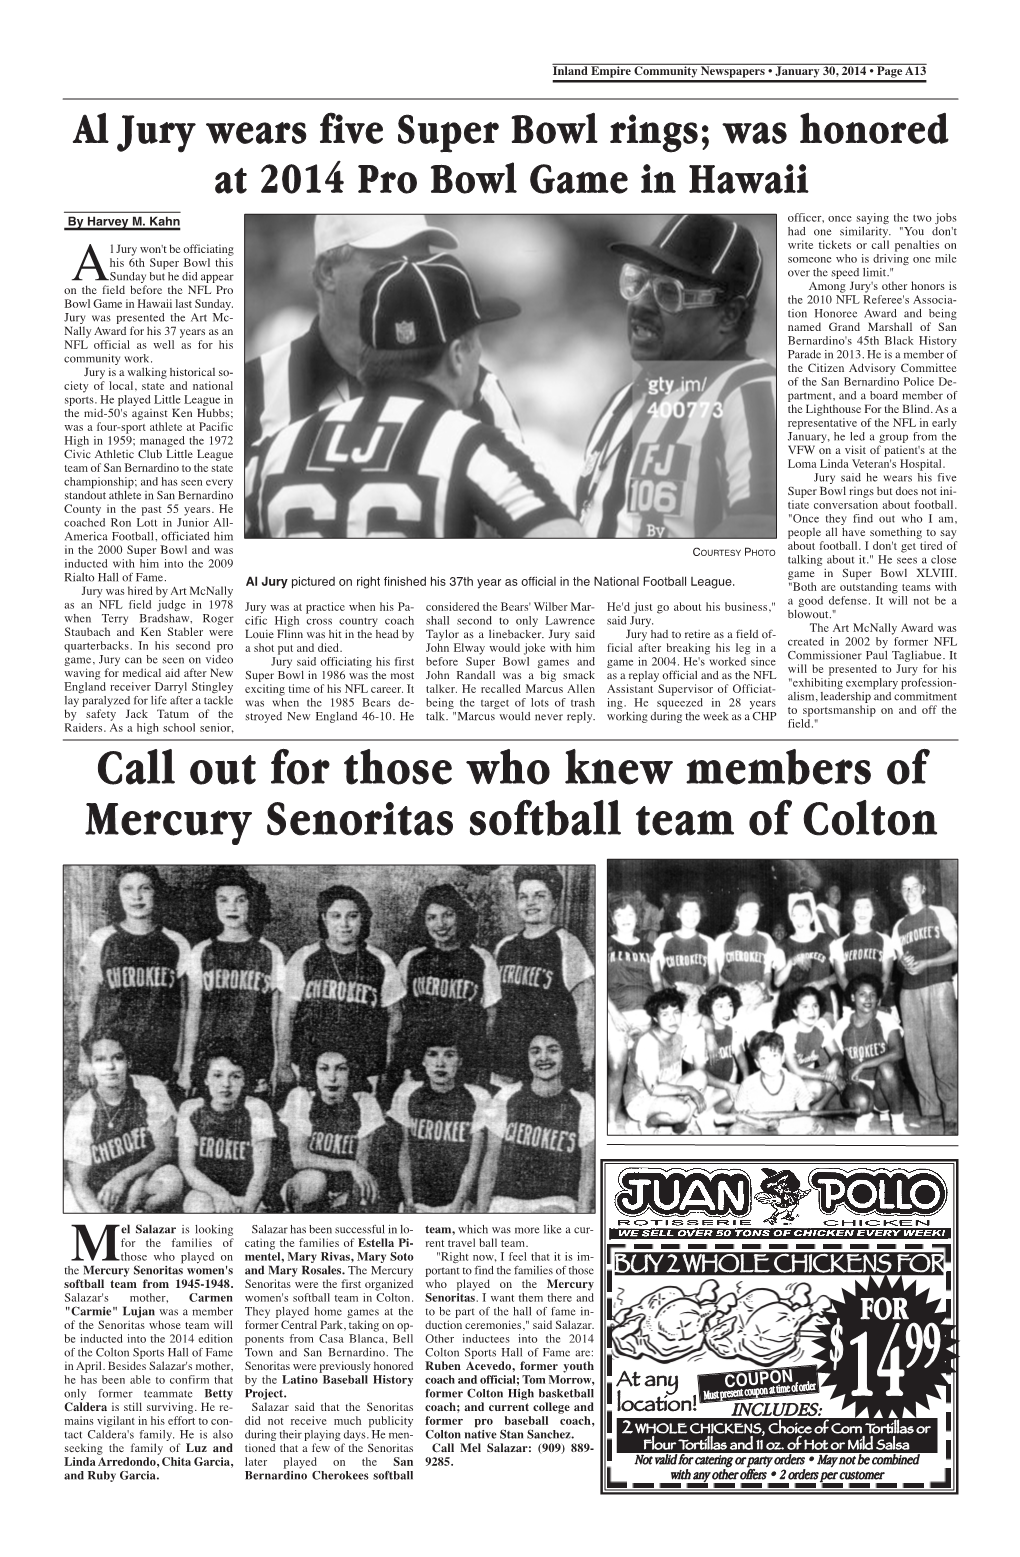 Call out for Those Who Knew Members of Mercury Senoritas Softball Team of Colton